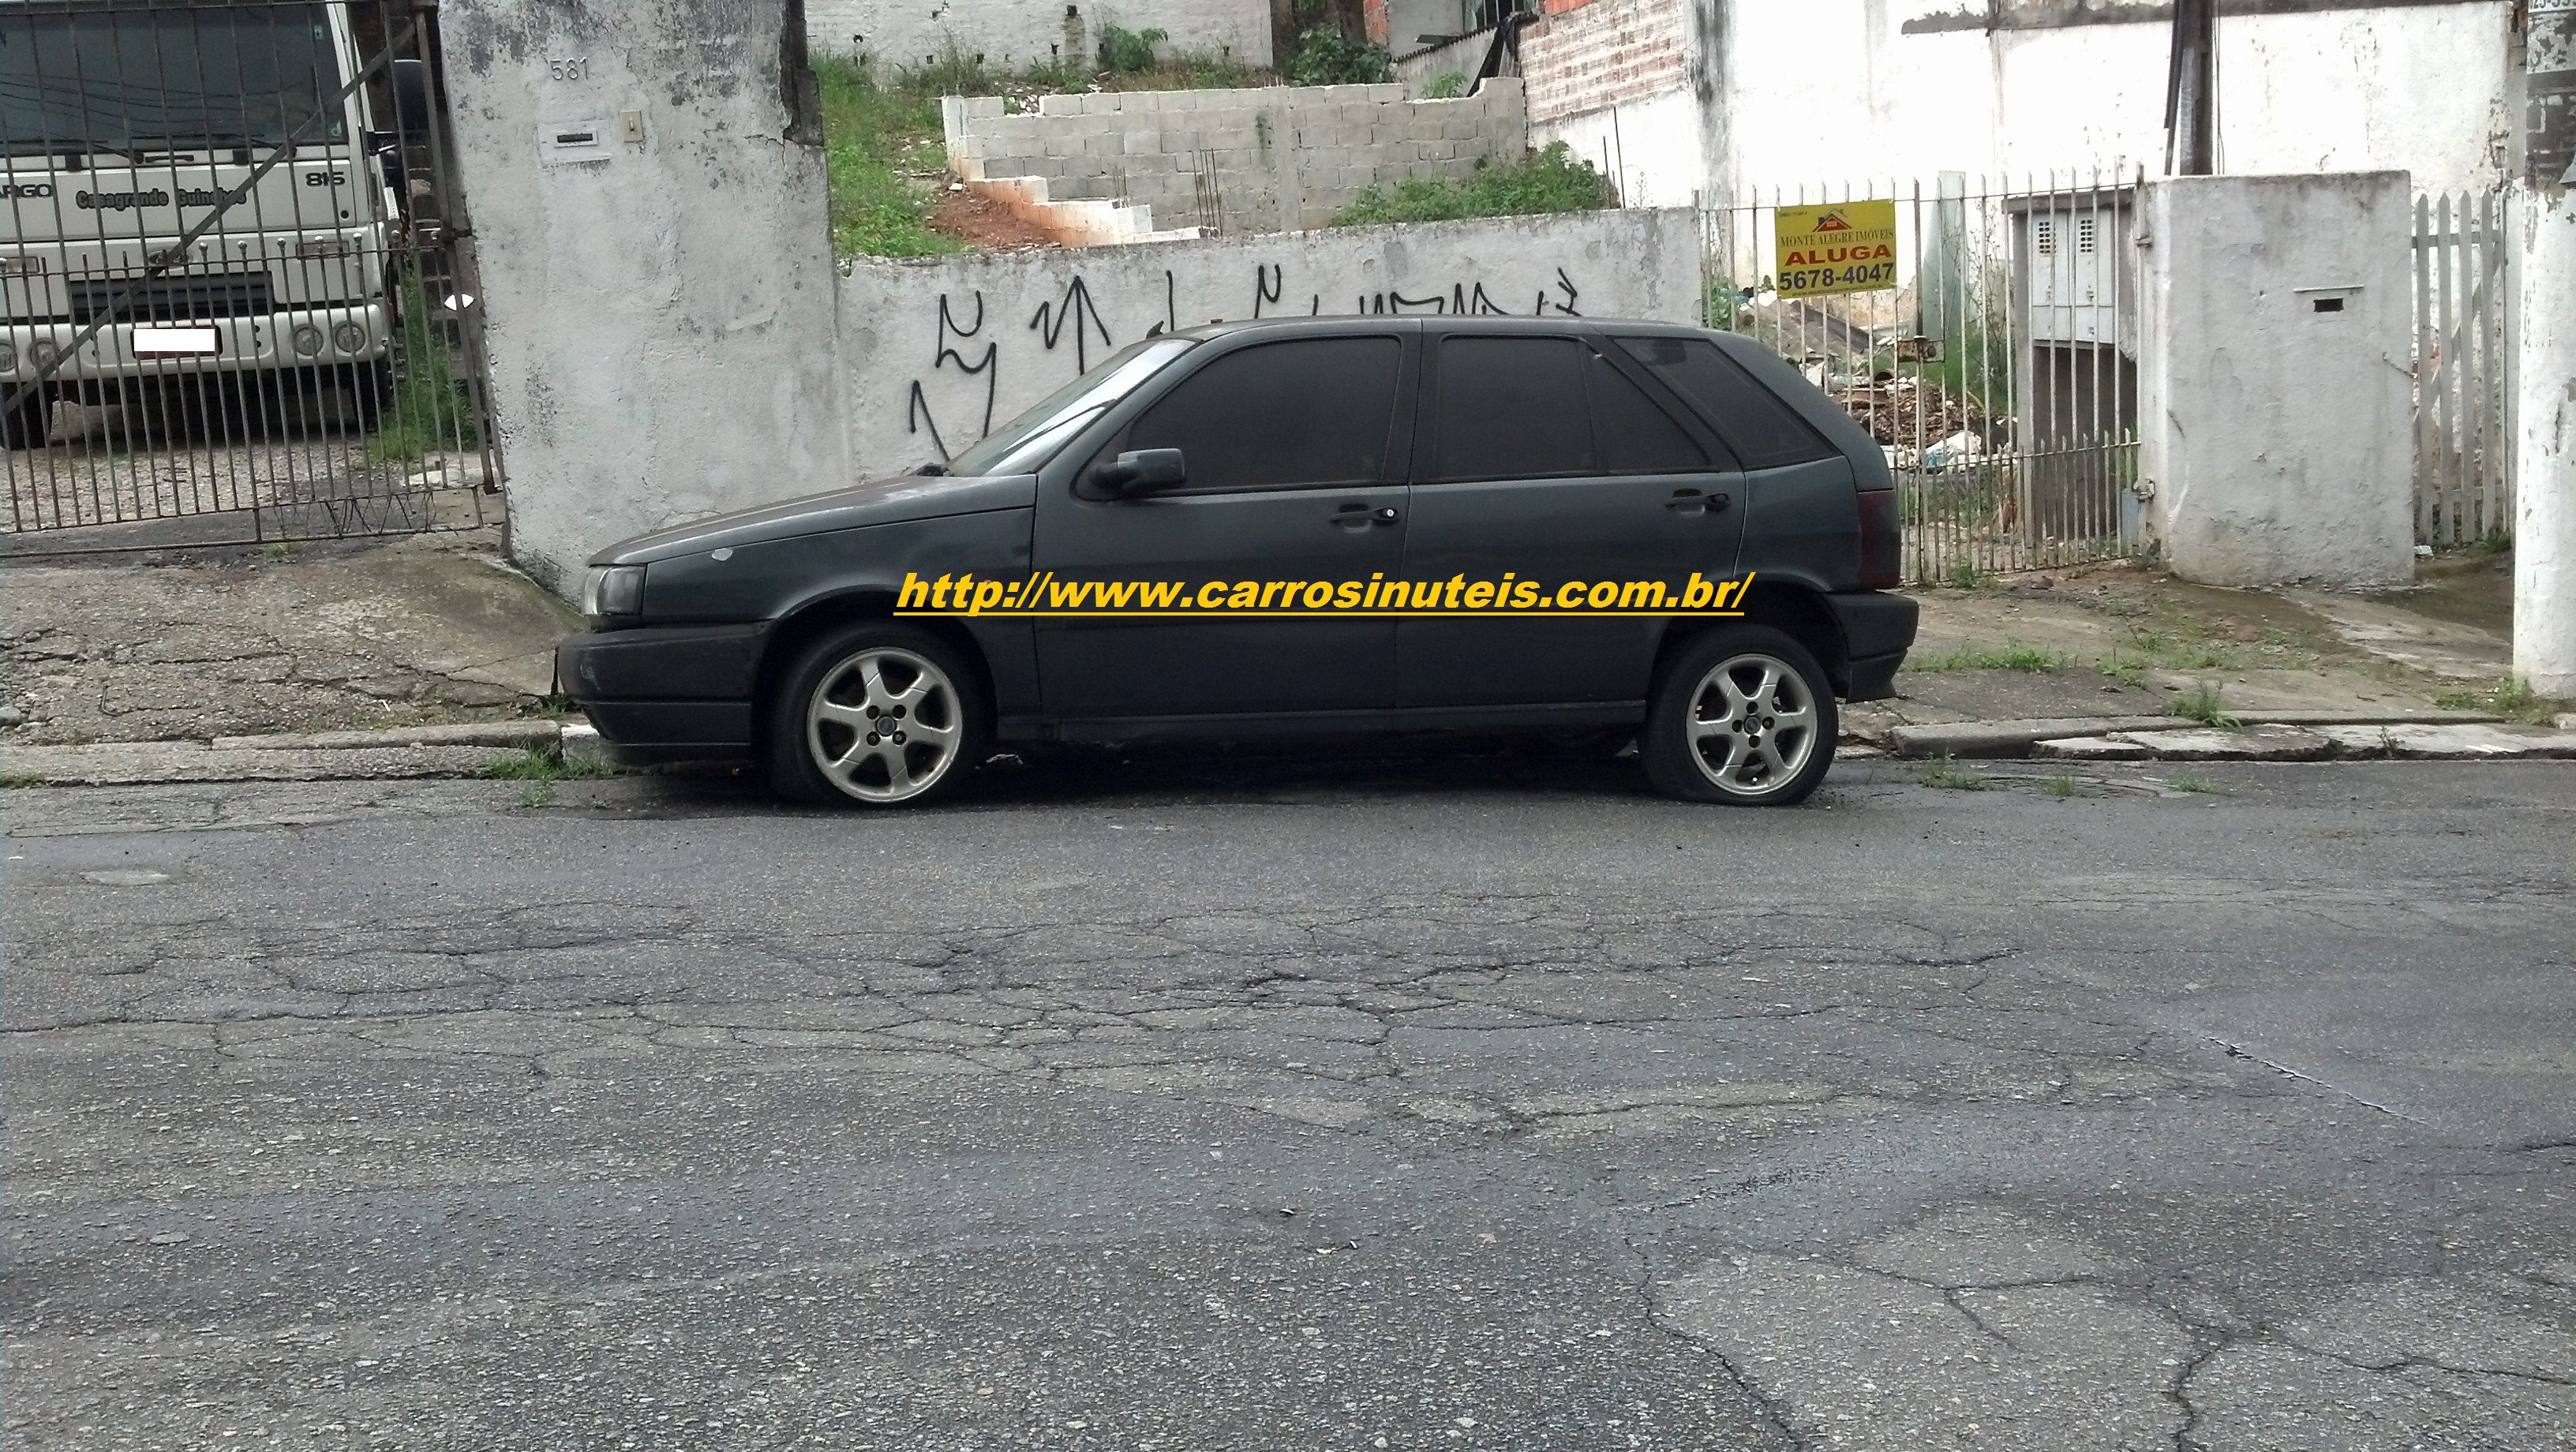 Fiat Tipo, José Roberto, São Paulo, SP